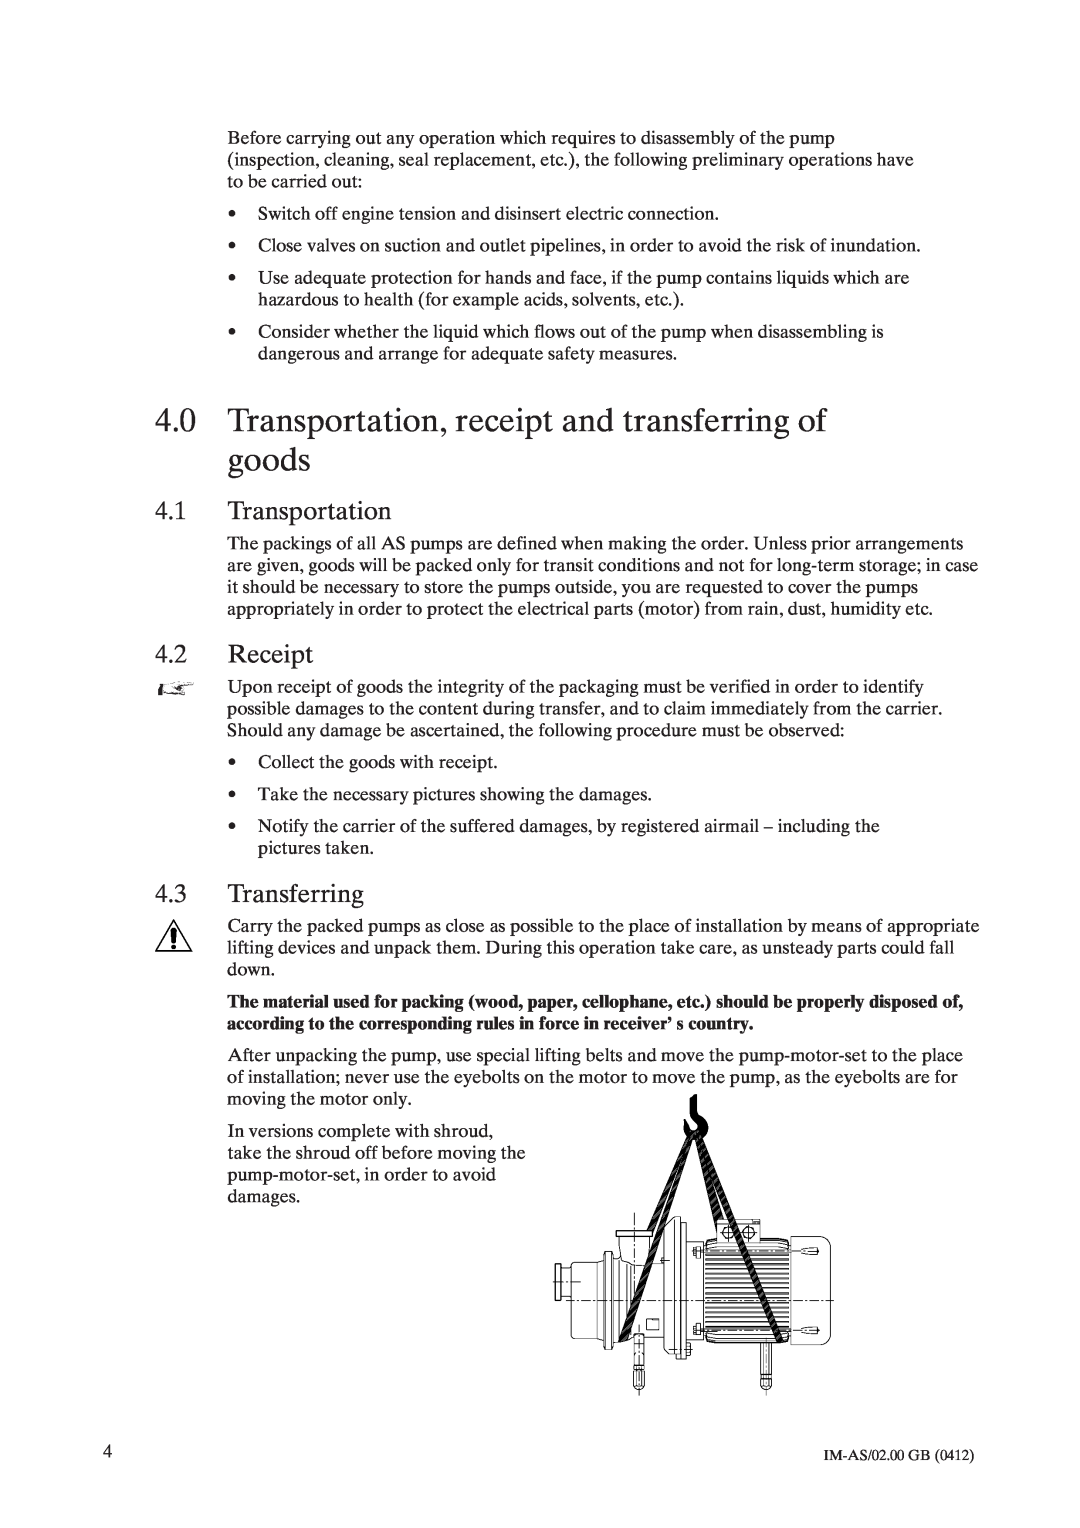 Johnson Controls AS instruction manual 4.1Transportation, 4.2Receipt, 4.3Transferring 